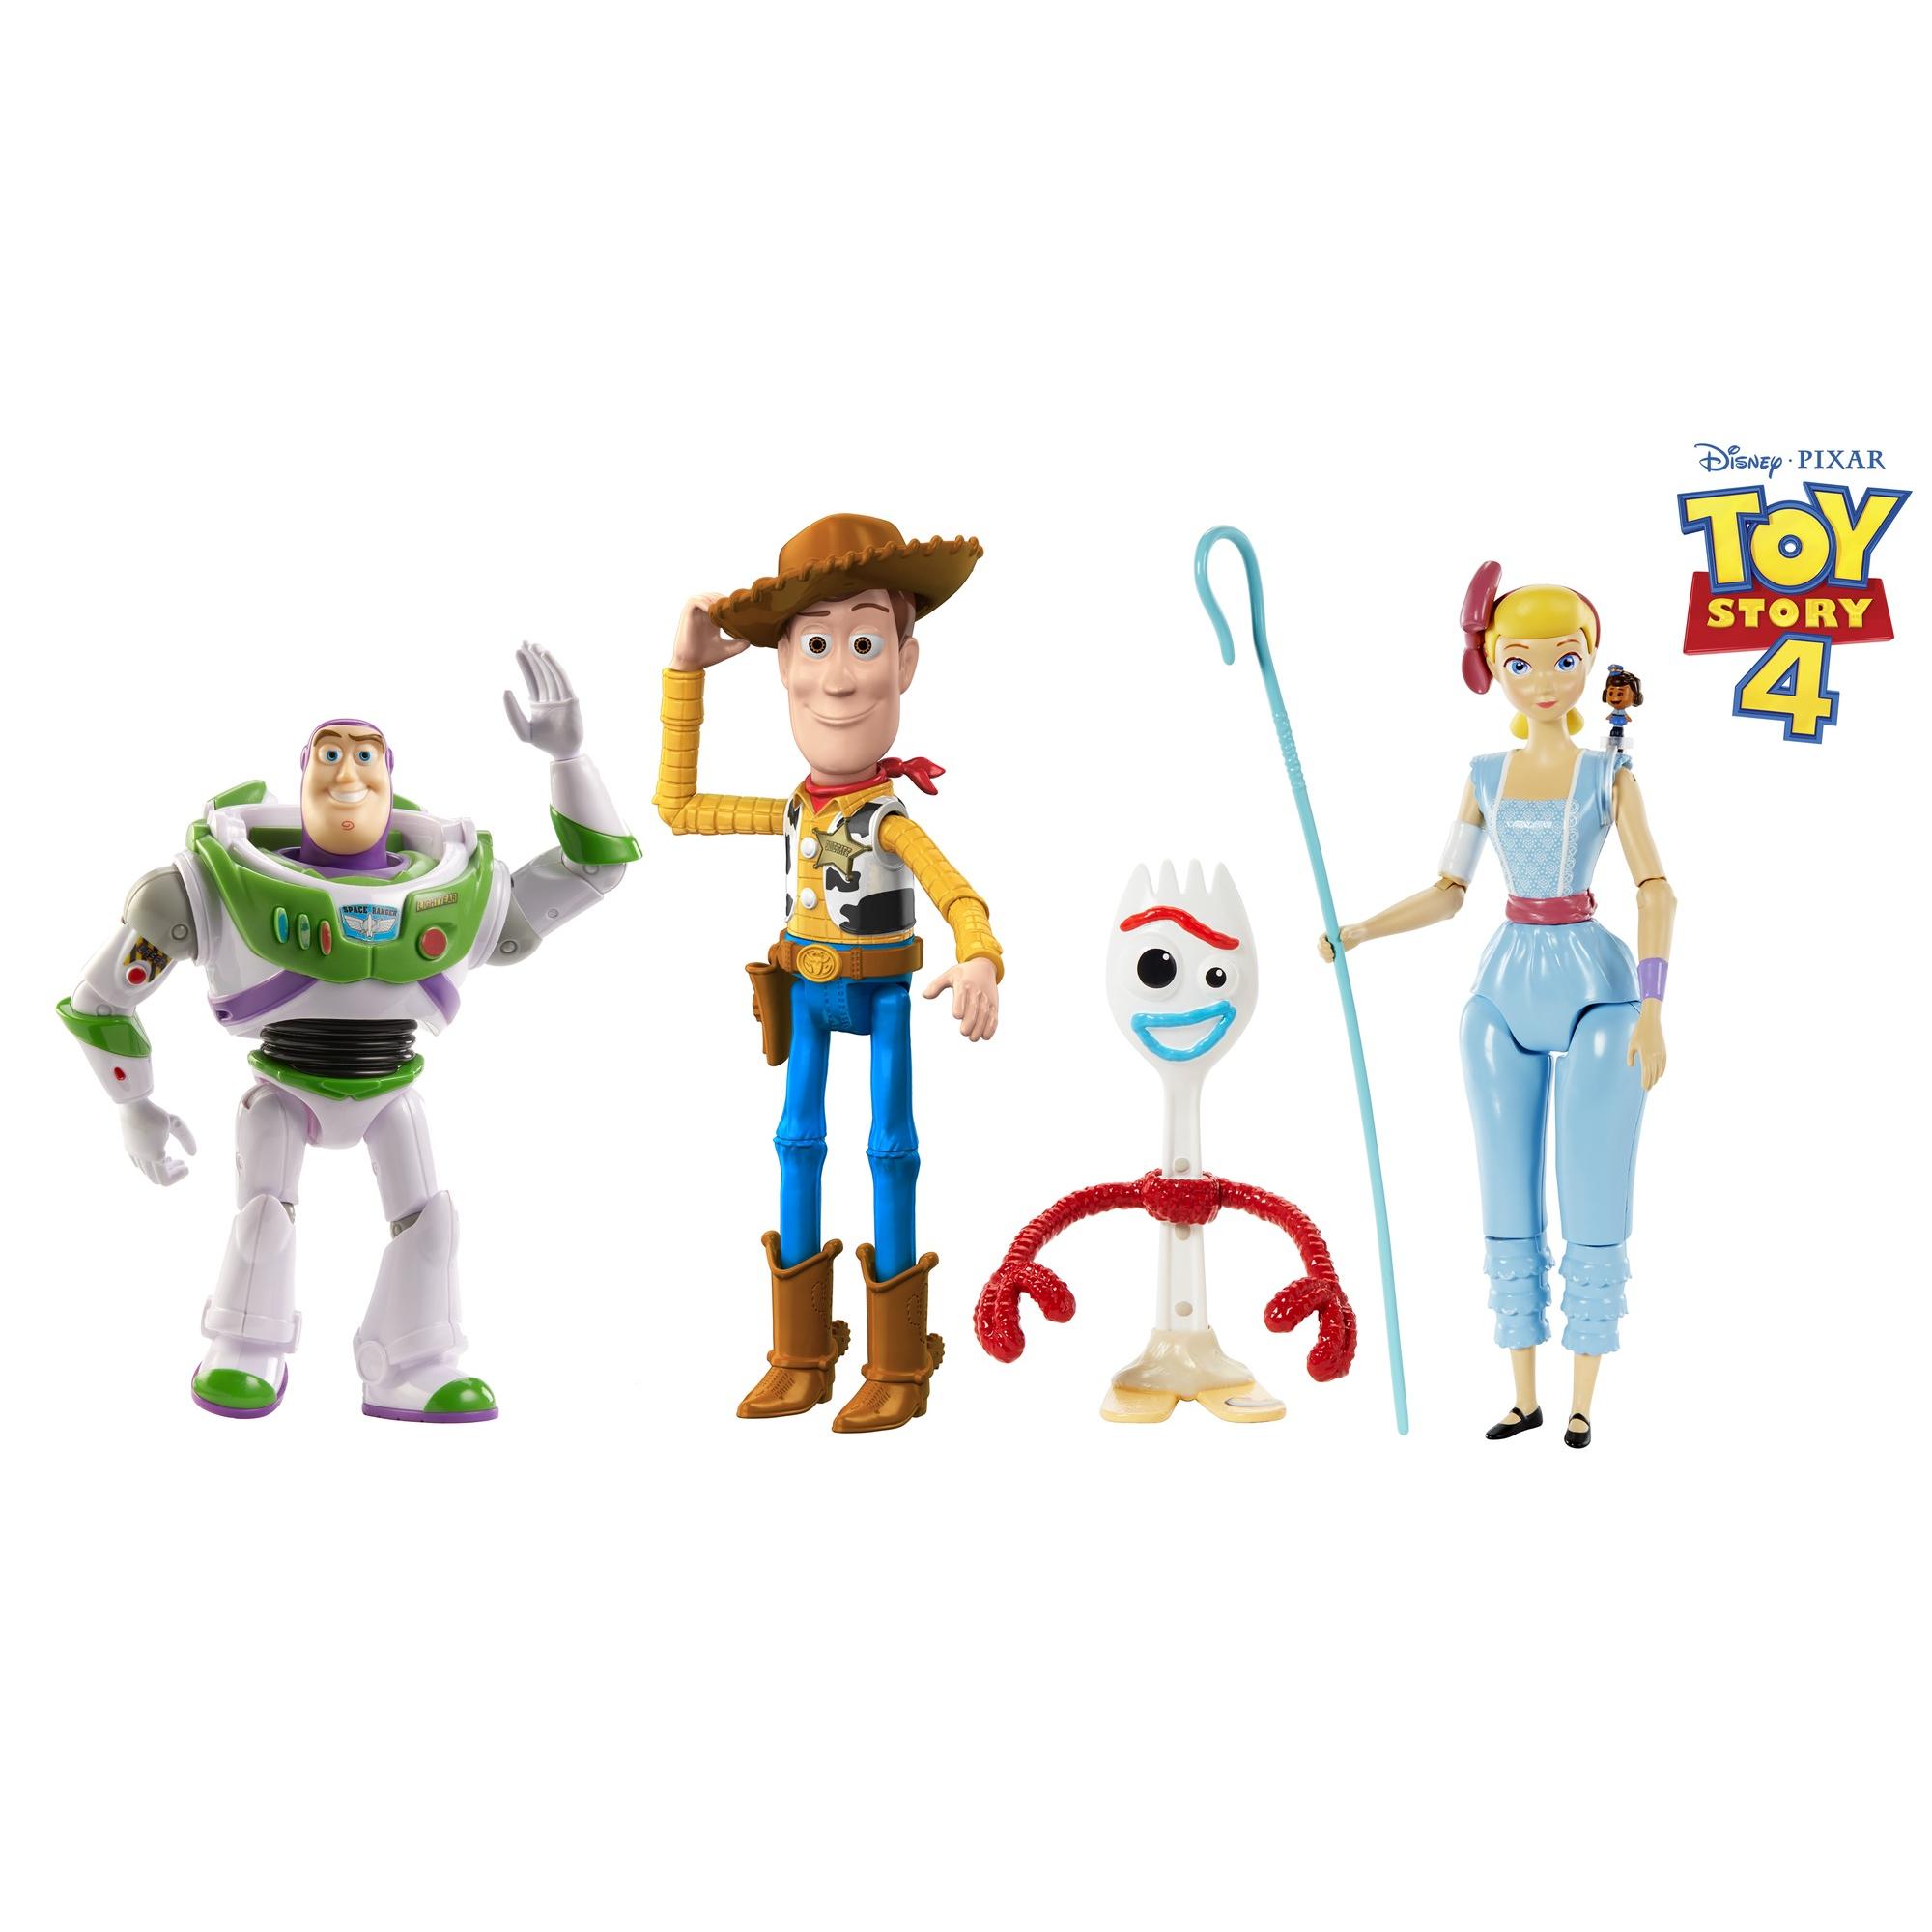 Disney Pixar Toy Story 4 Adventure Multi-Figure 4-Pack - image 1 of 5